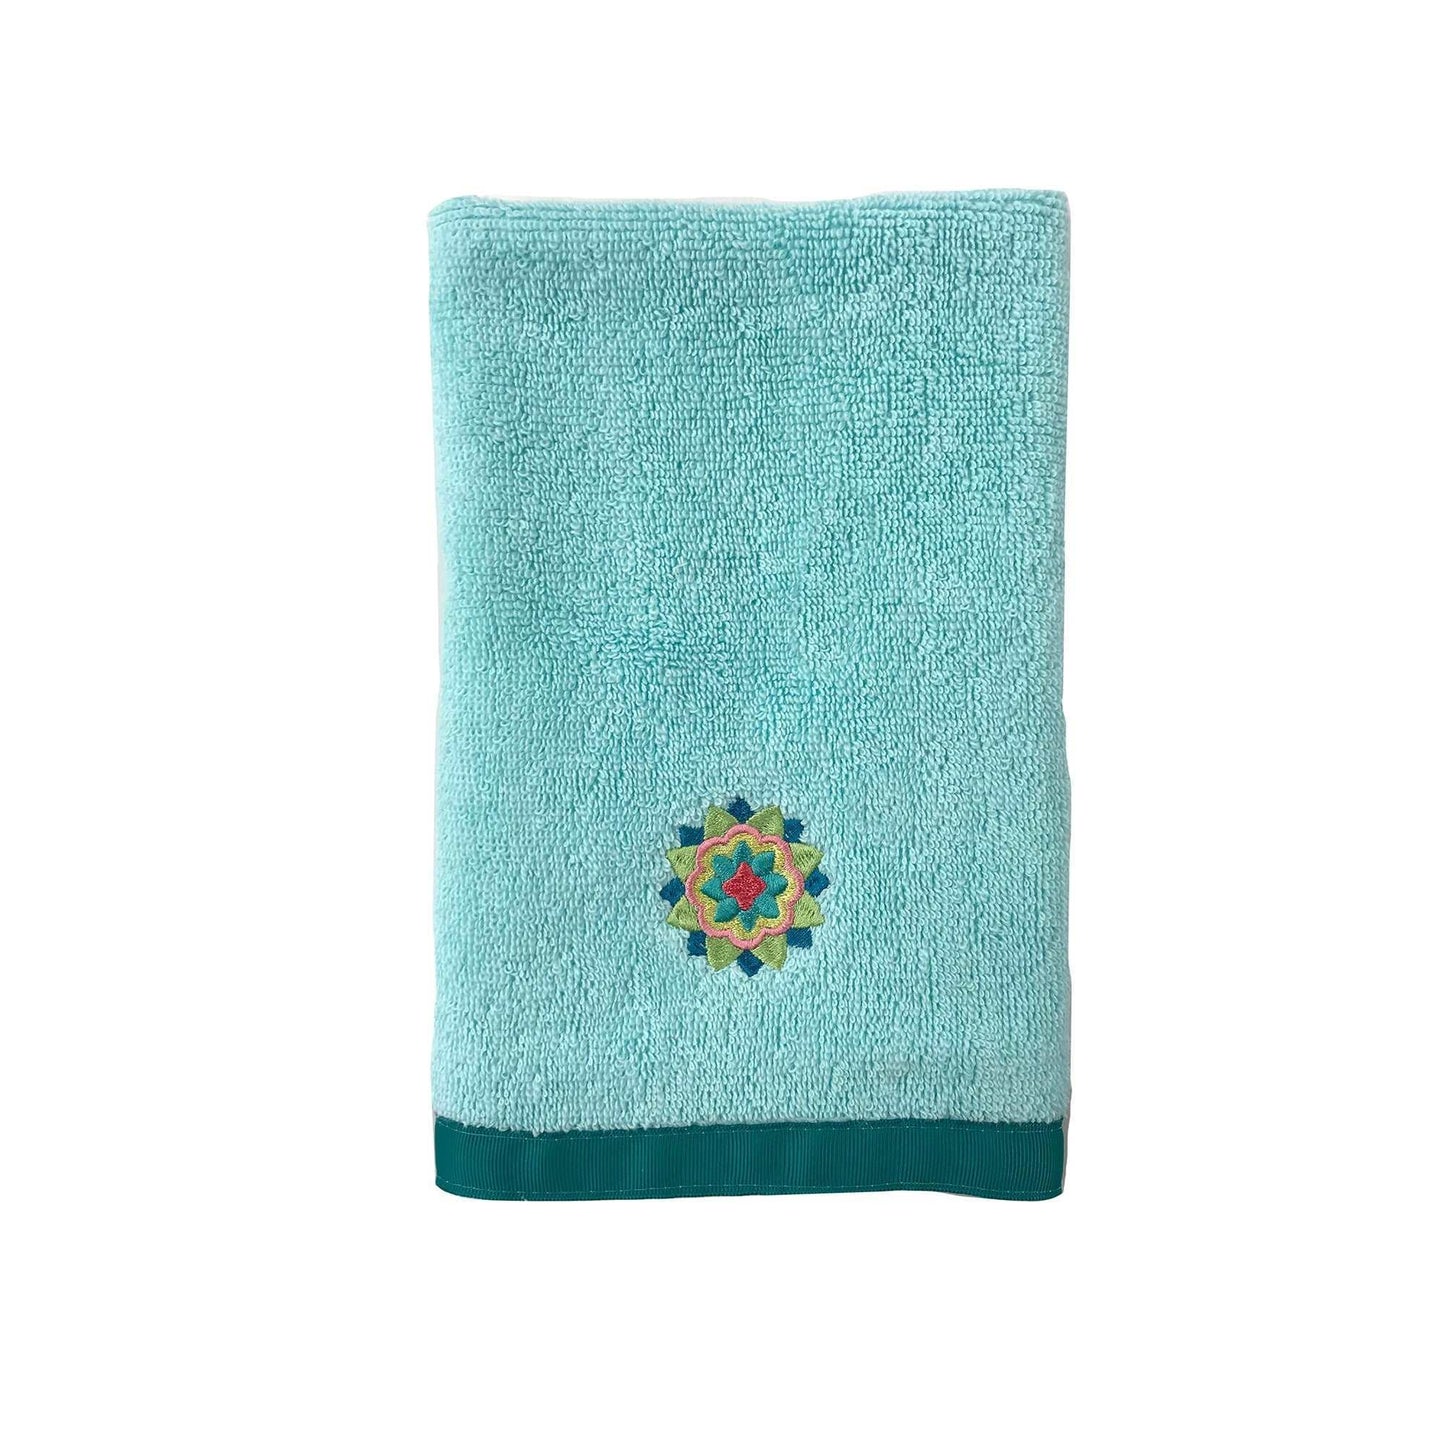 Ariel Medallion 3-Piece Cotton Embroidered Towel Set - Allure Home Creation